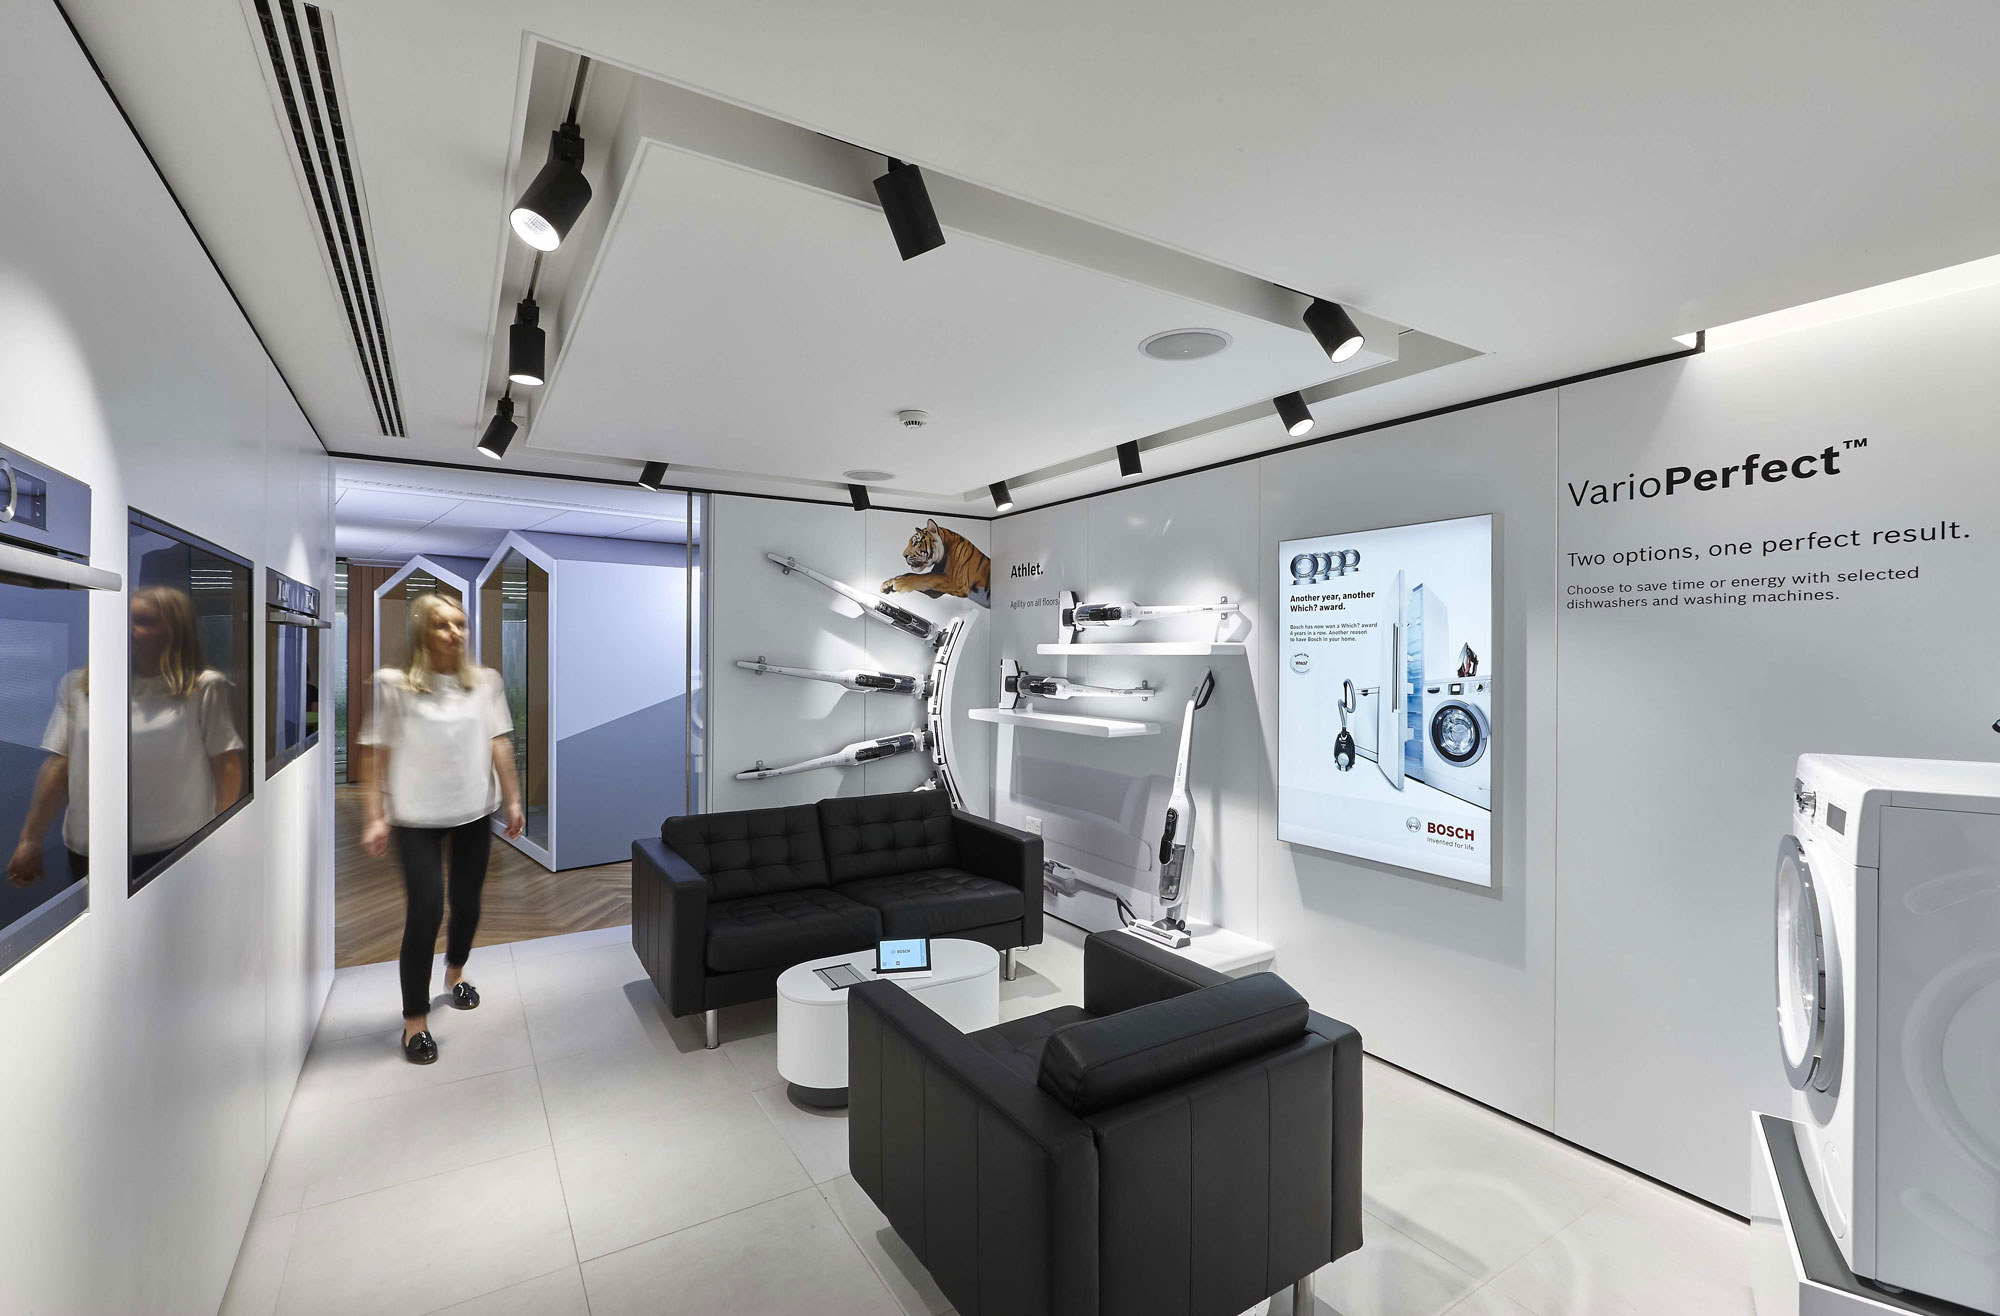 Siemens Bosch Neff Showroom | Commercial Photographer